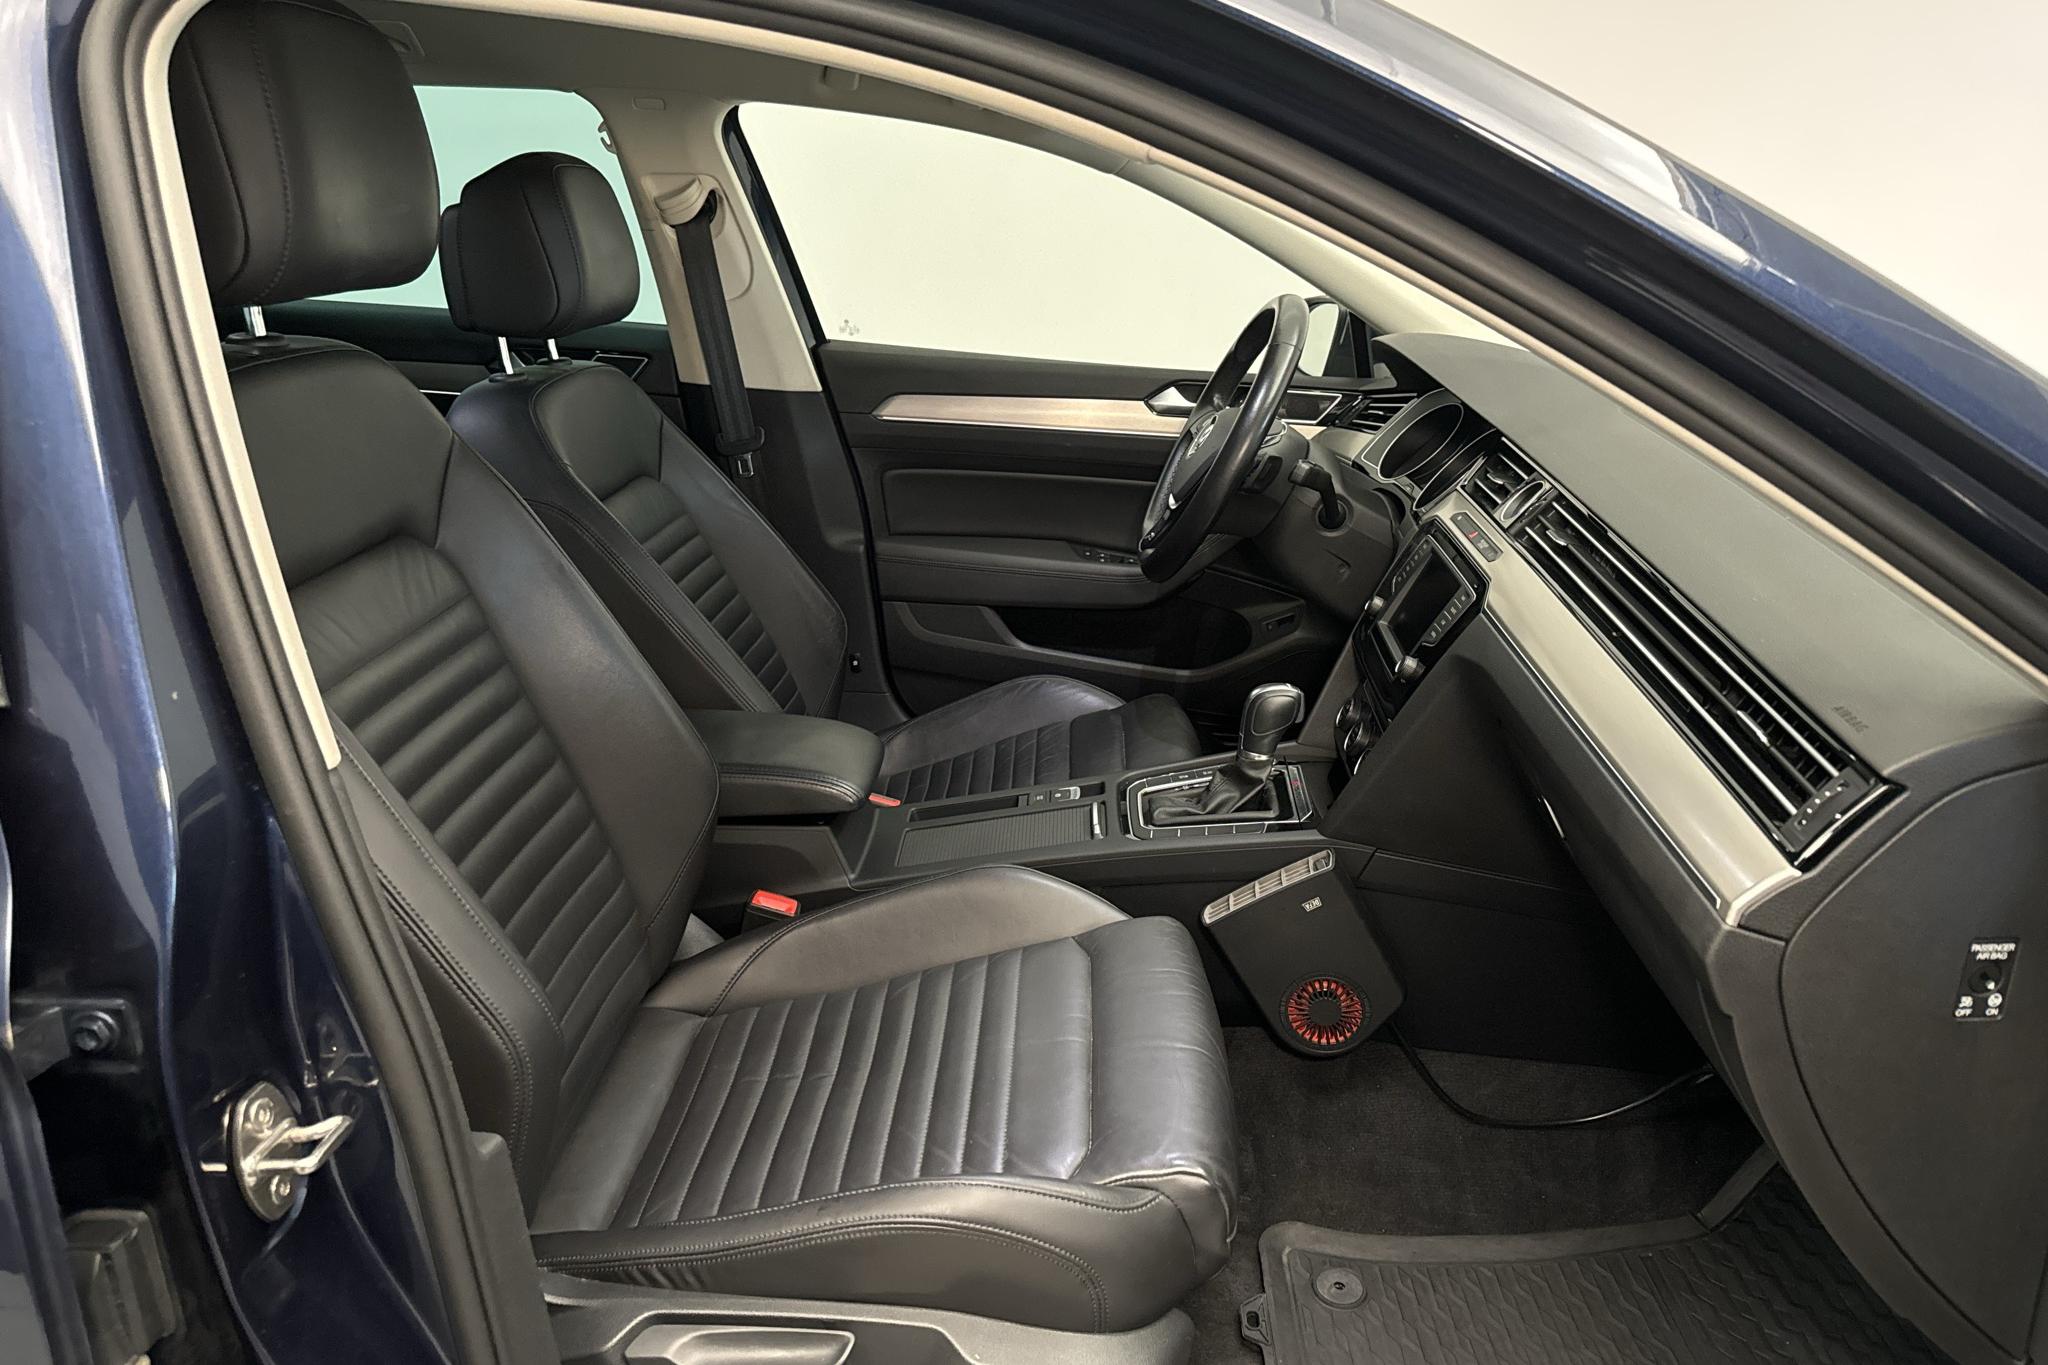 VW Passat 2.0 TDI Sportscombi 4MOTION (190hk) - 147 850 km - Automaatne - Dark Blue - 2016